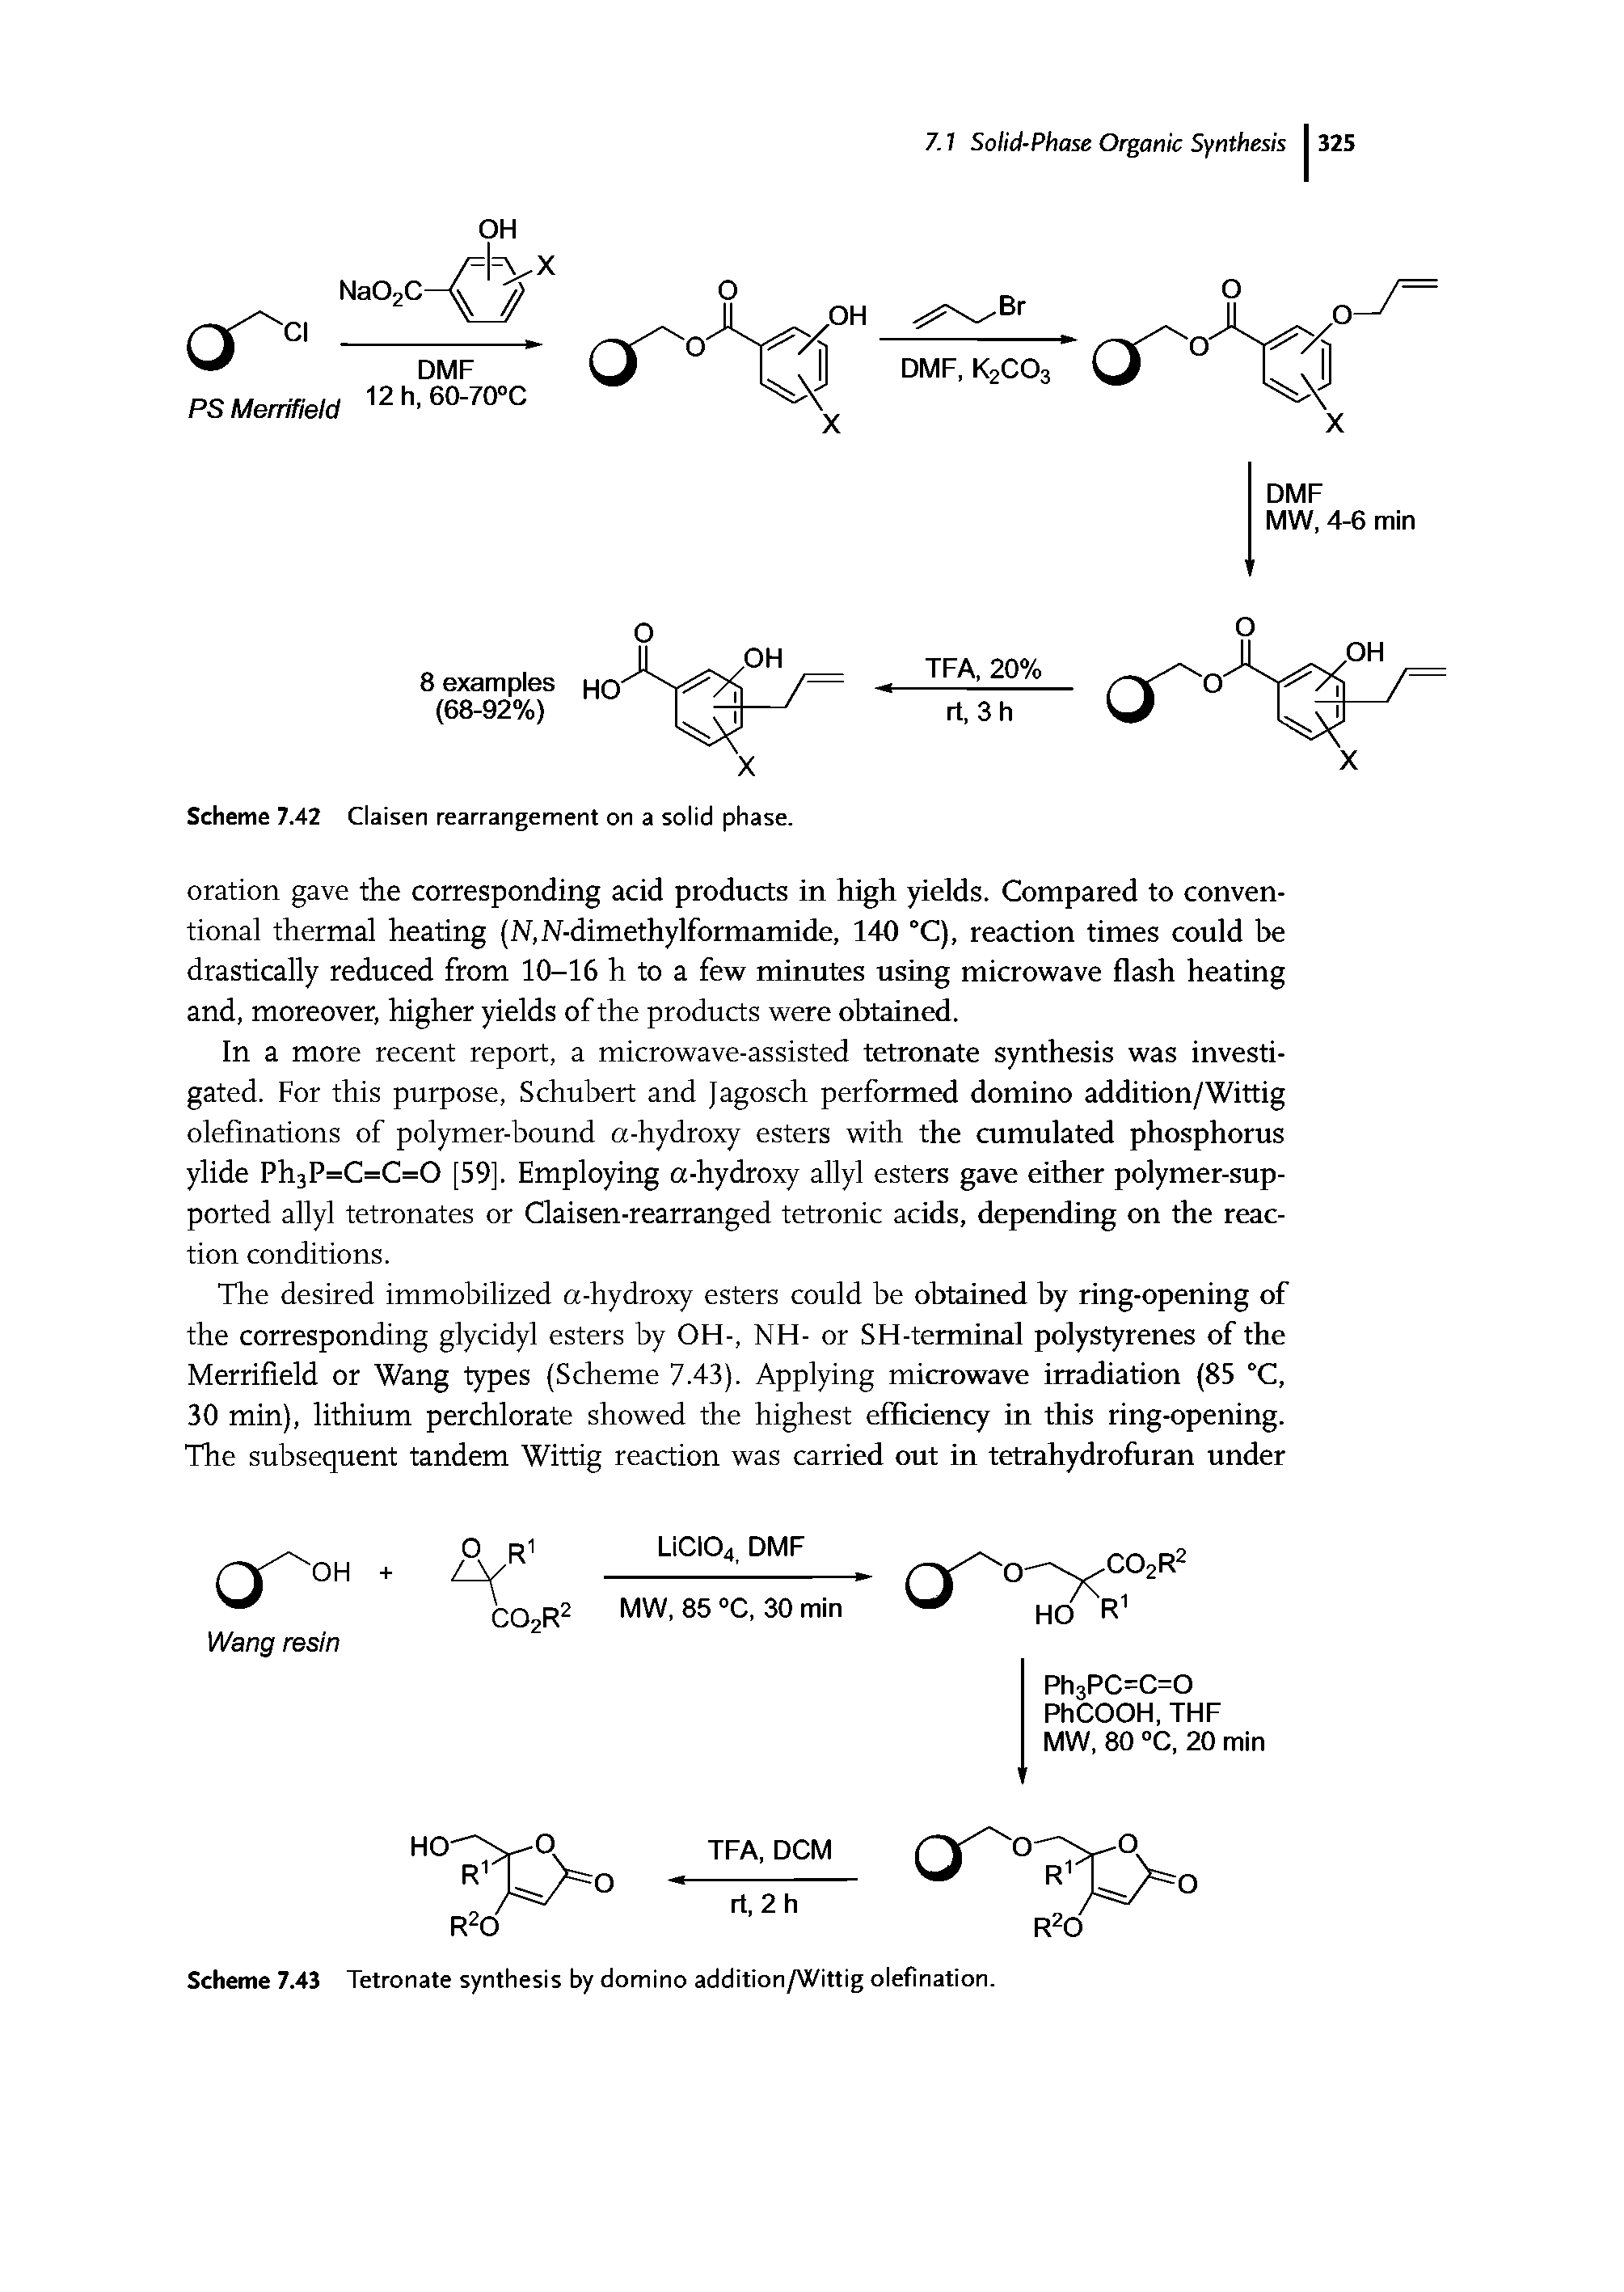 Scheme 7.43 Tetronate synthesis by domino addition/Wittig olefination.